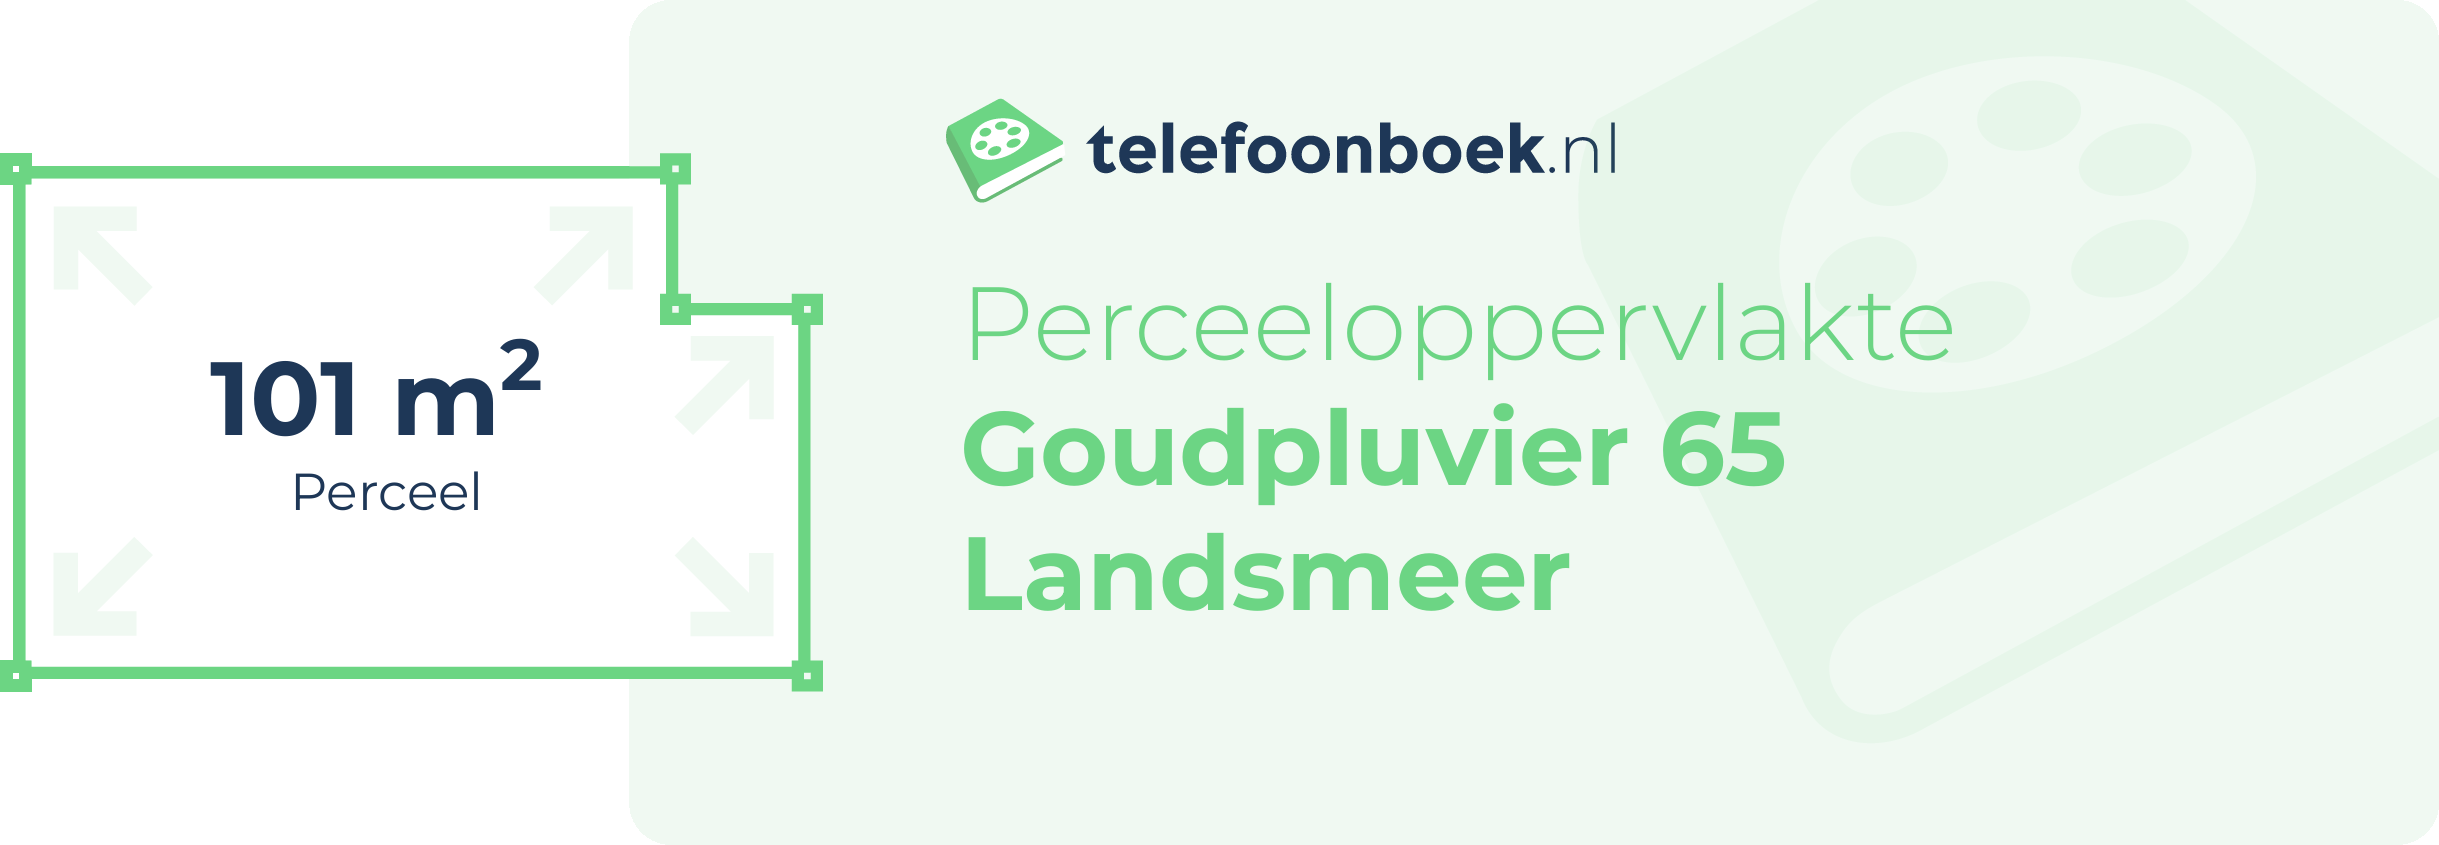 Perceeloppervlakte Goudpluvier 65 Landsmeer